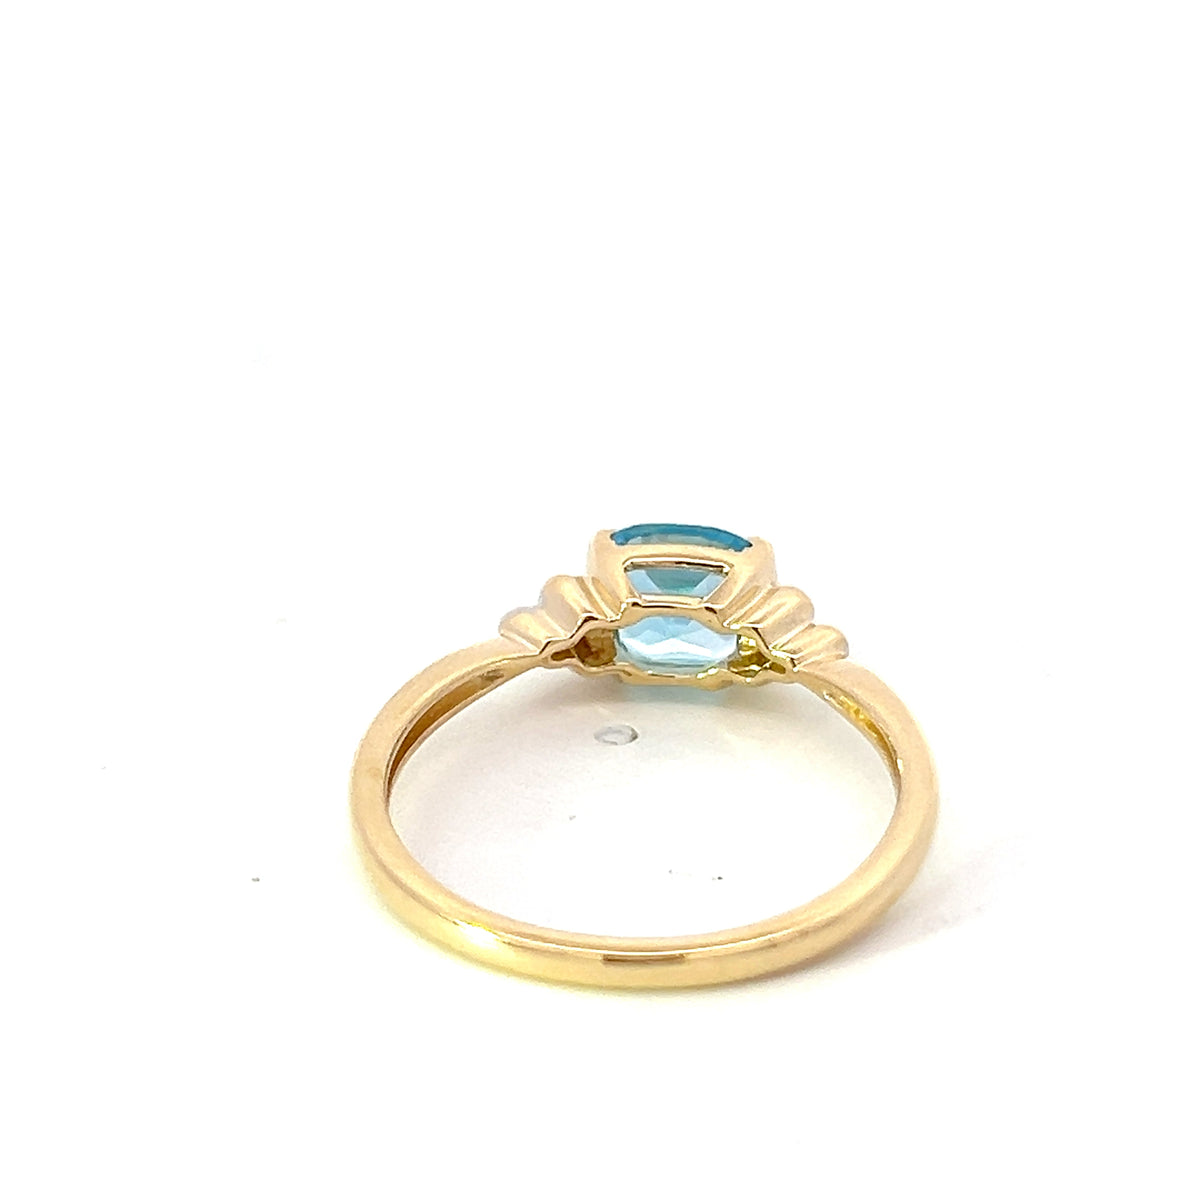 10K Yellow Gold 1.15cttw Swiss Blue Topaz and 0.03cttw Diamond Ring